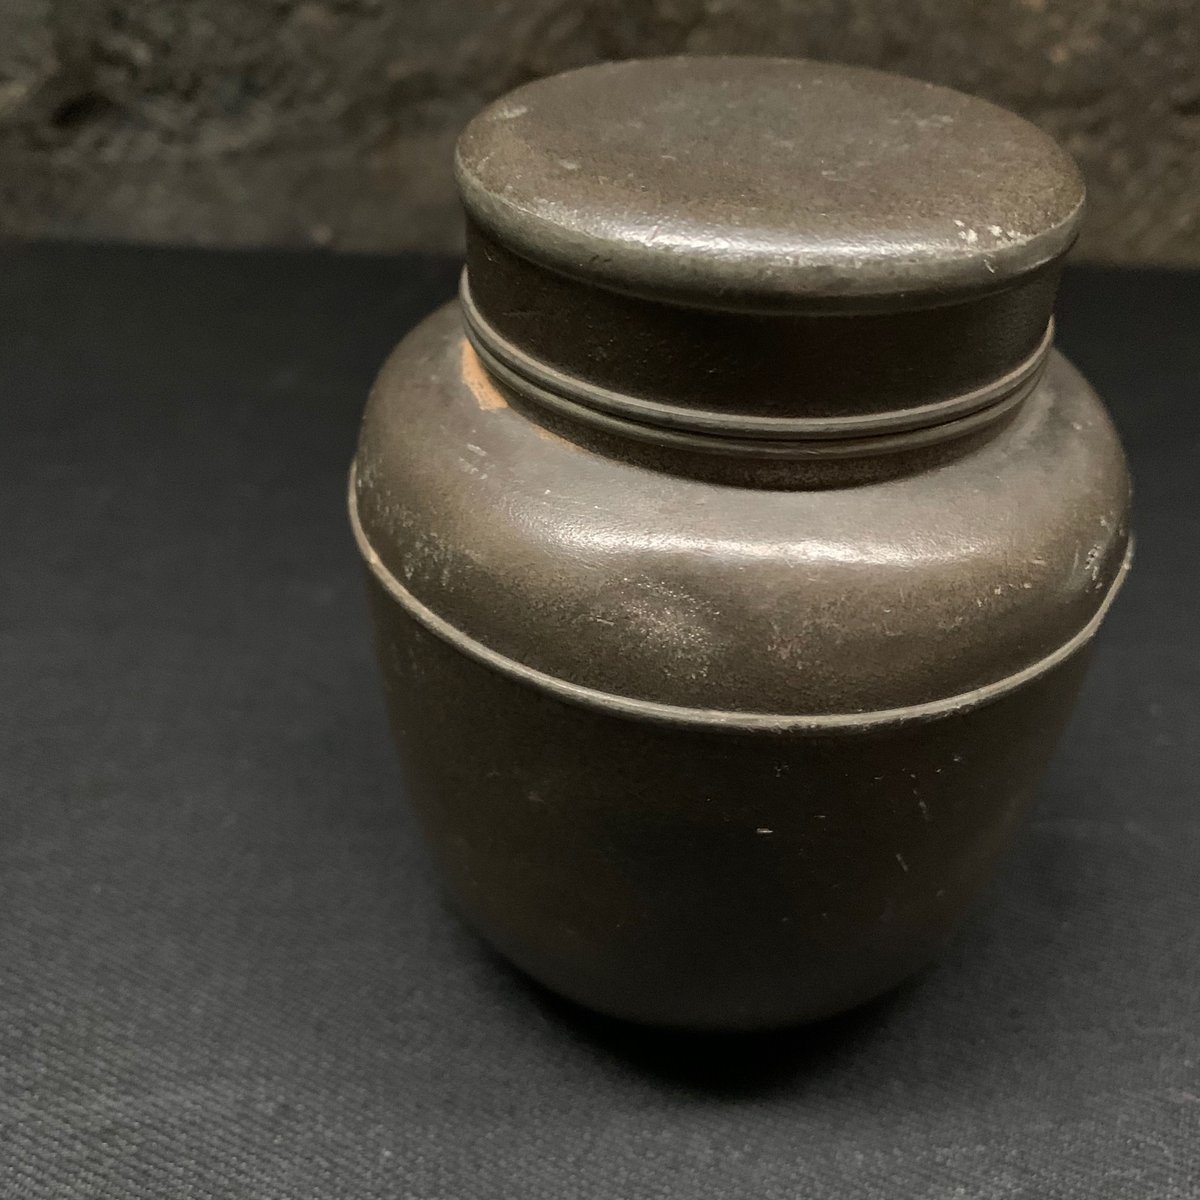 Japan Antique 古錫 純錫 中村半造 茶壺 煎茶 道具 錫 茶壷 茶入 